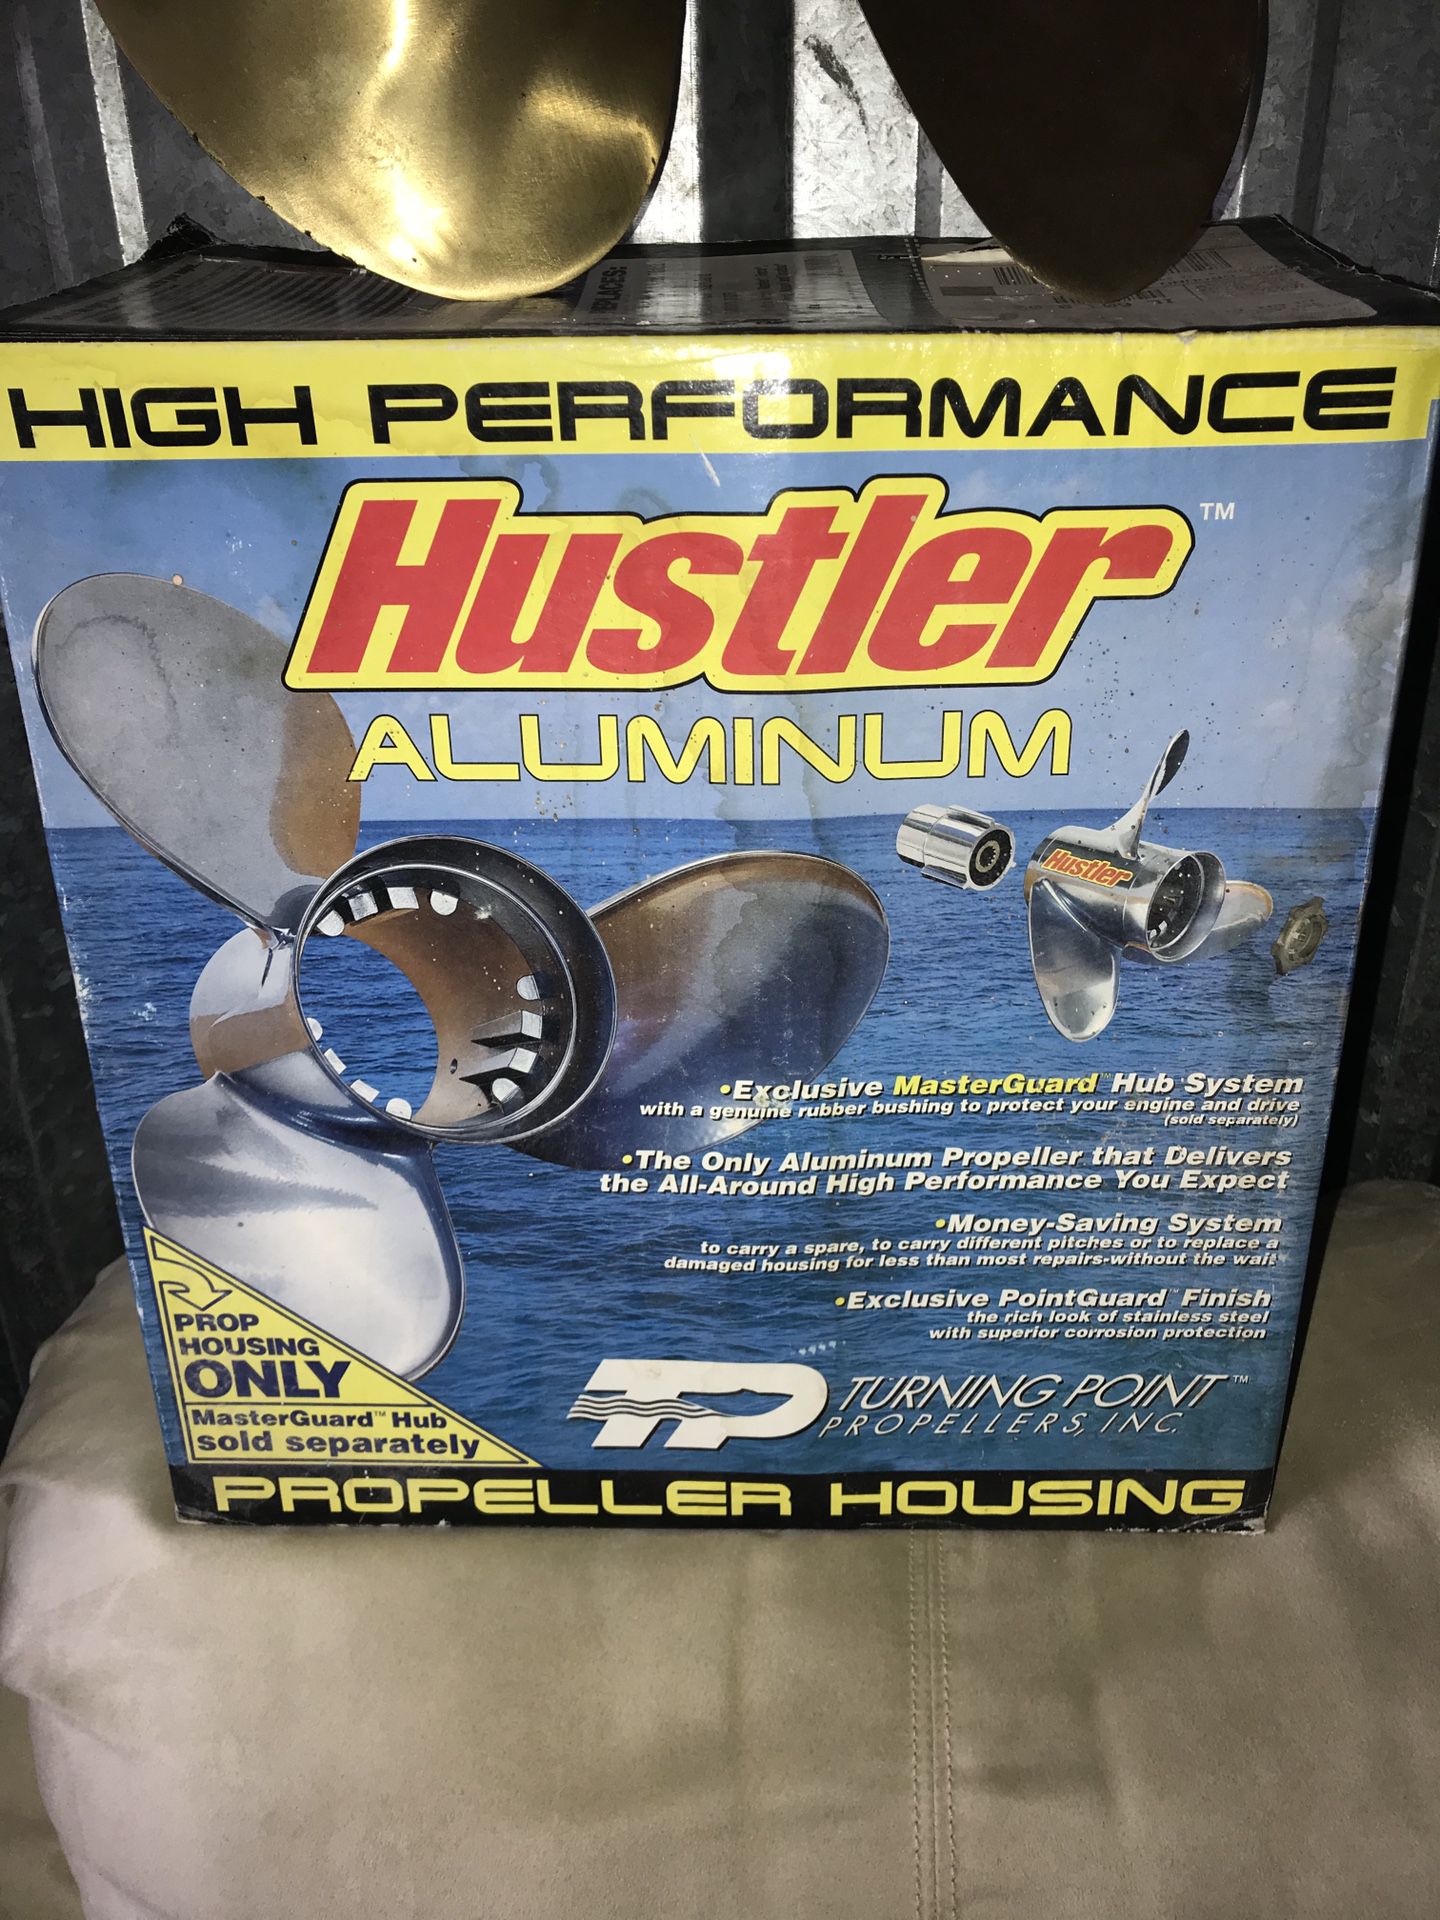 Brand new in box Hustler aluminum boat propreller